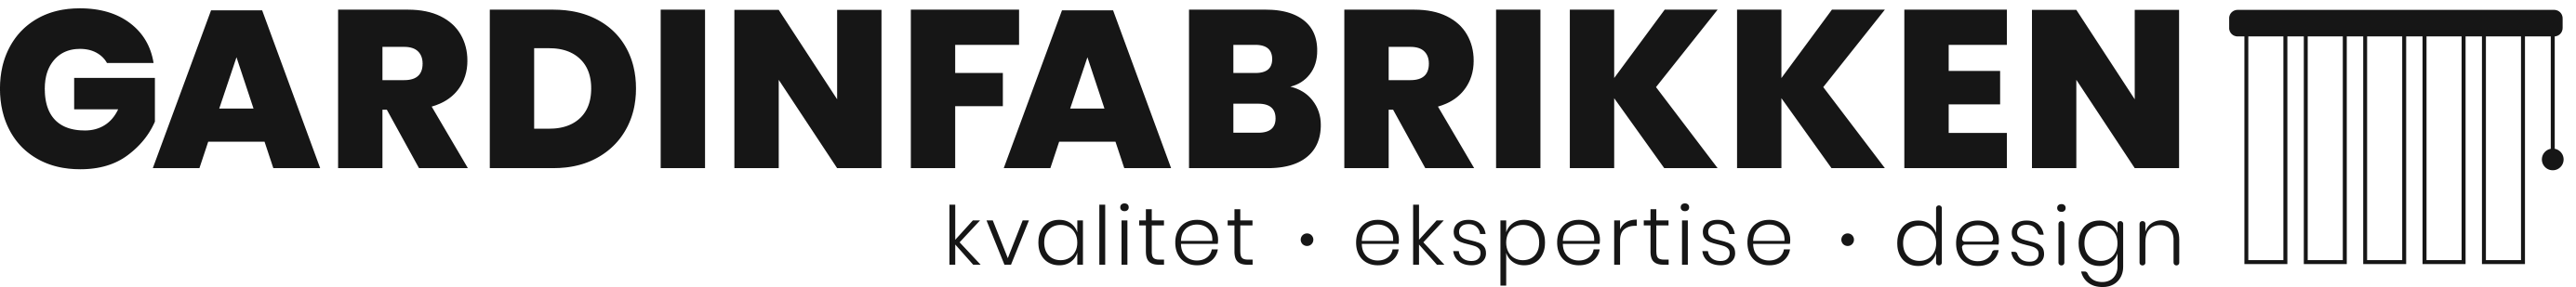 gardinfabrikken logo